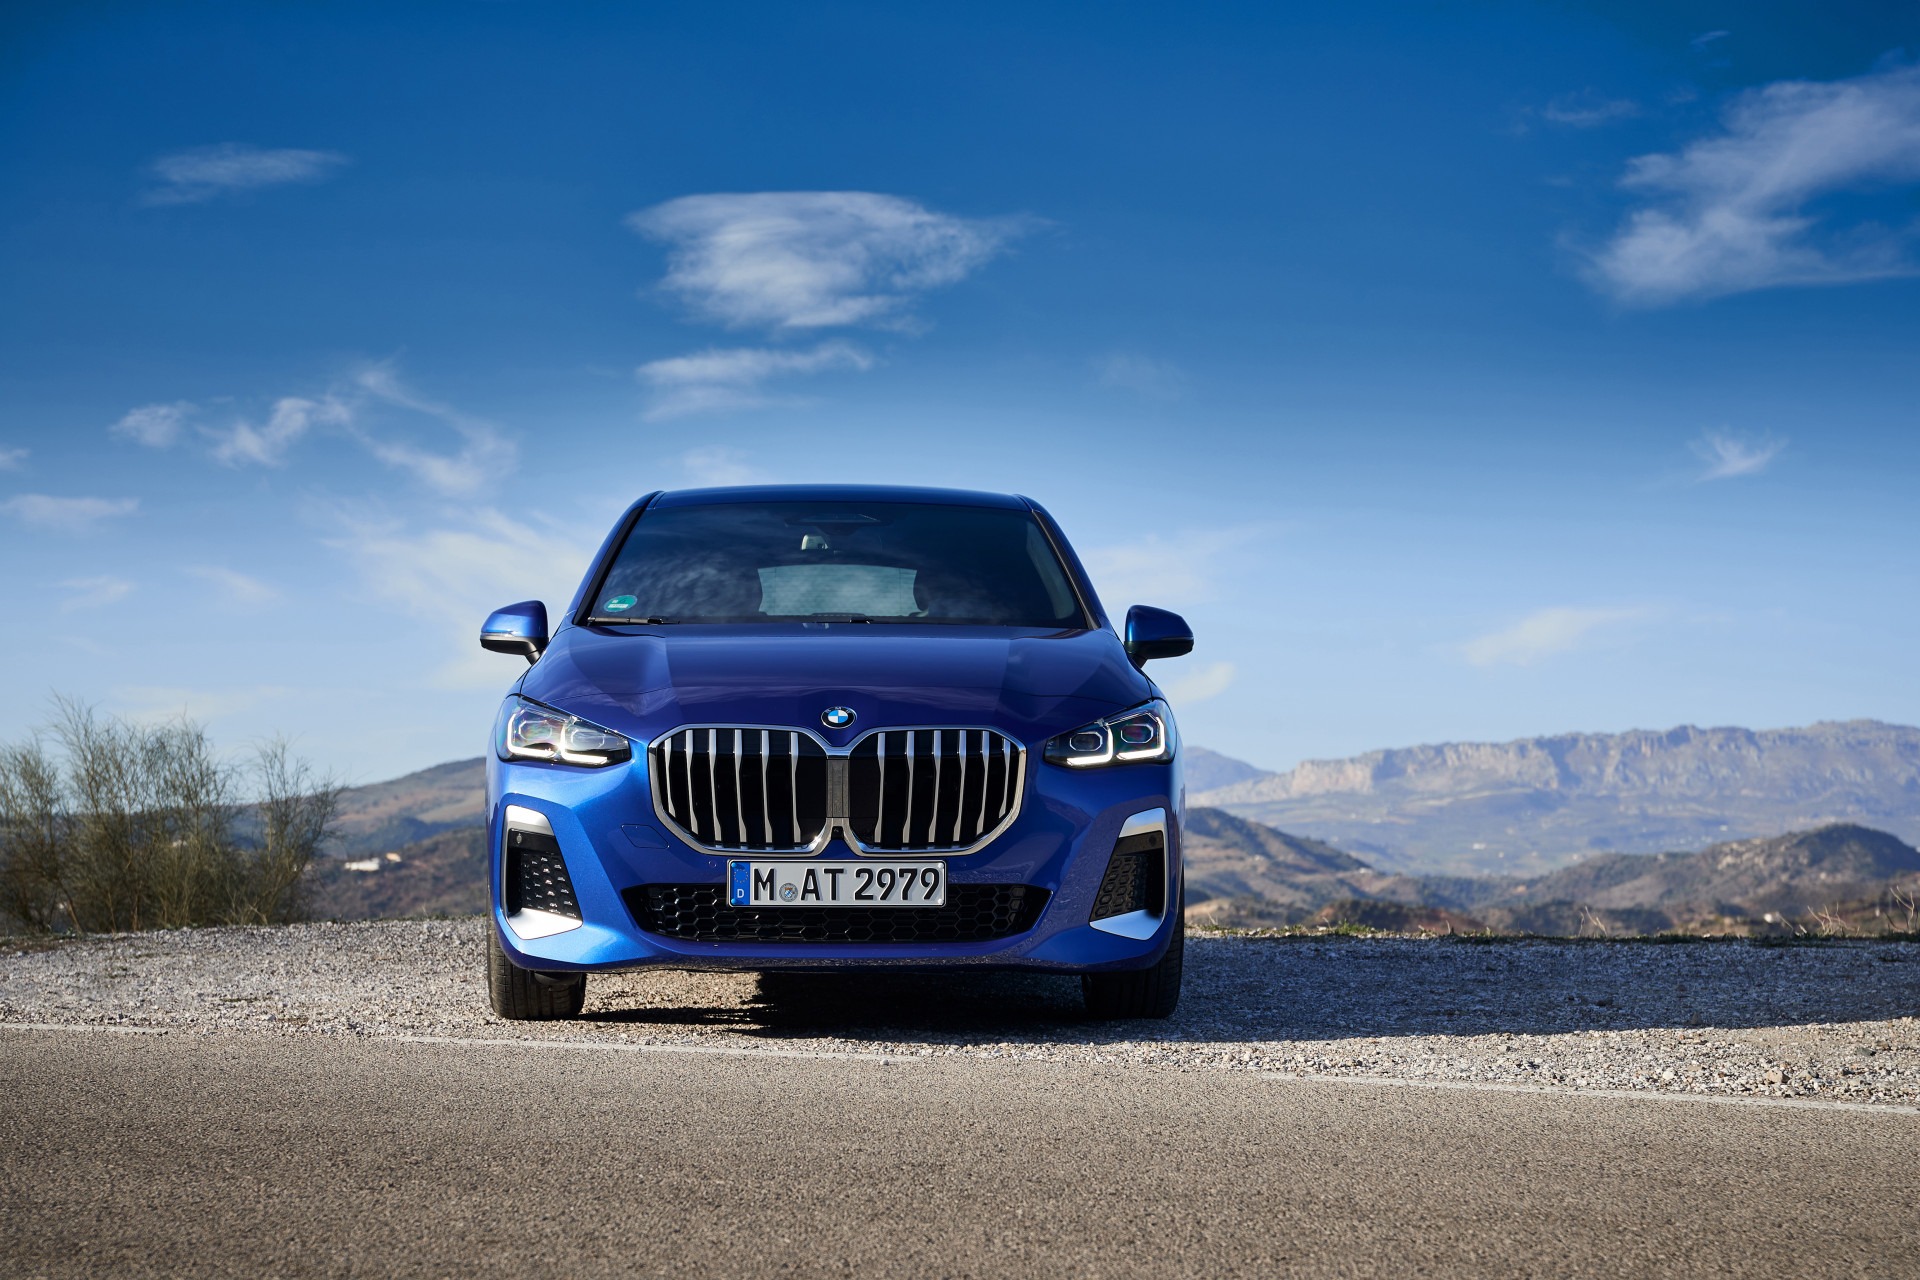 BMW Série 2 Active Tourer : essais, comparatif d'offres, avis